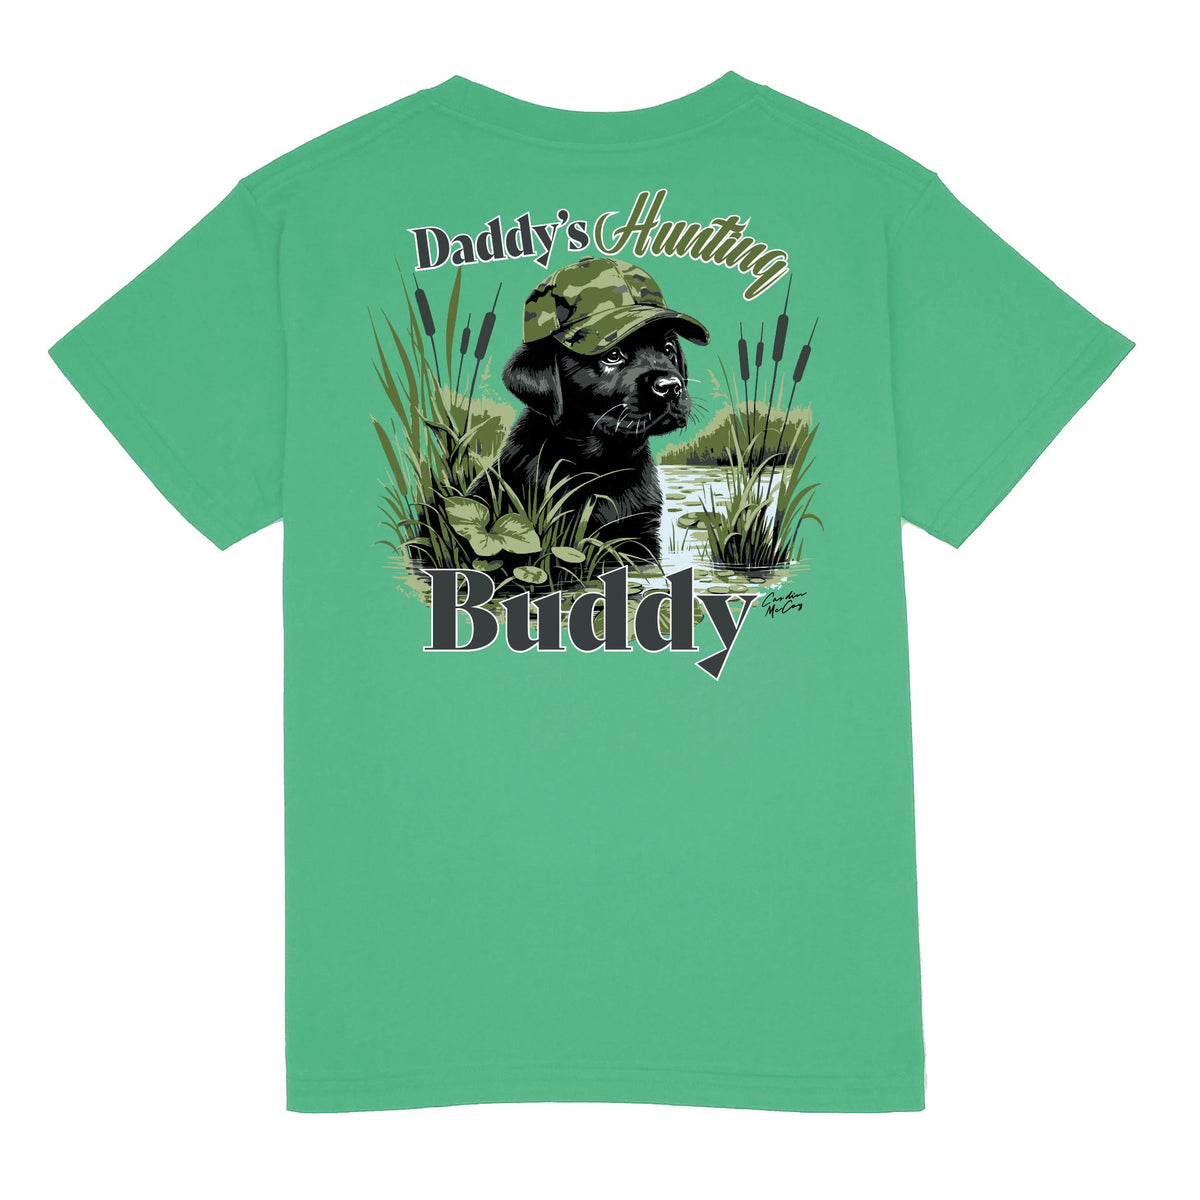 Kids' Daddy's Hunting Buddy Short Sleeve Pocket Tee Short Sleeve T-Shirt Cardin McCoy Green XXS (2/3) 